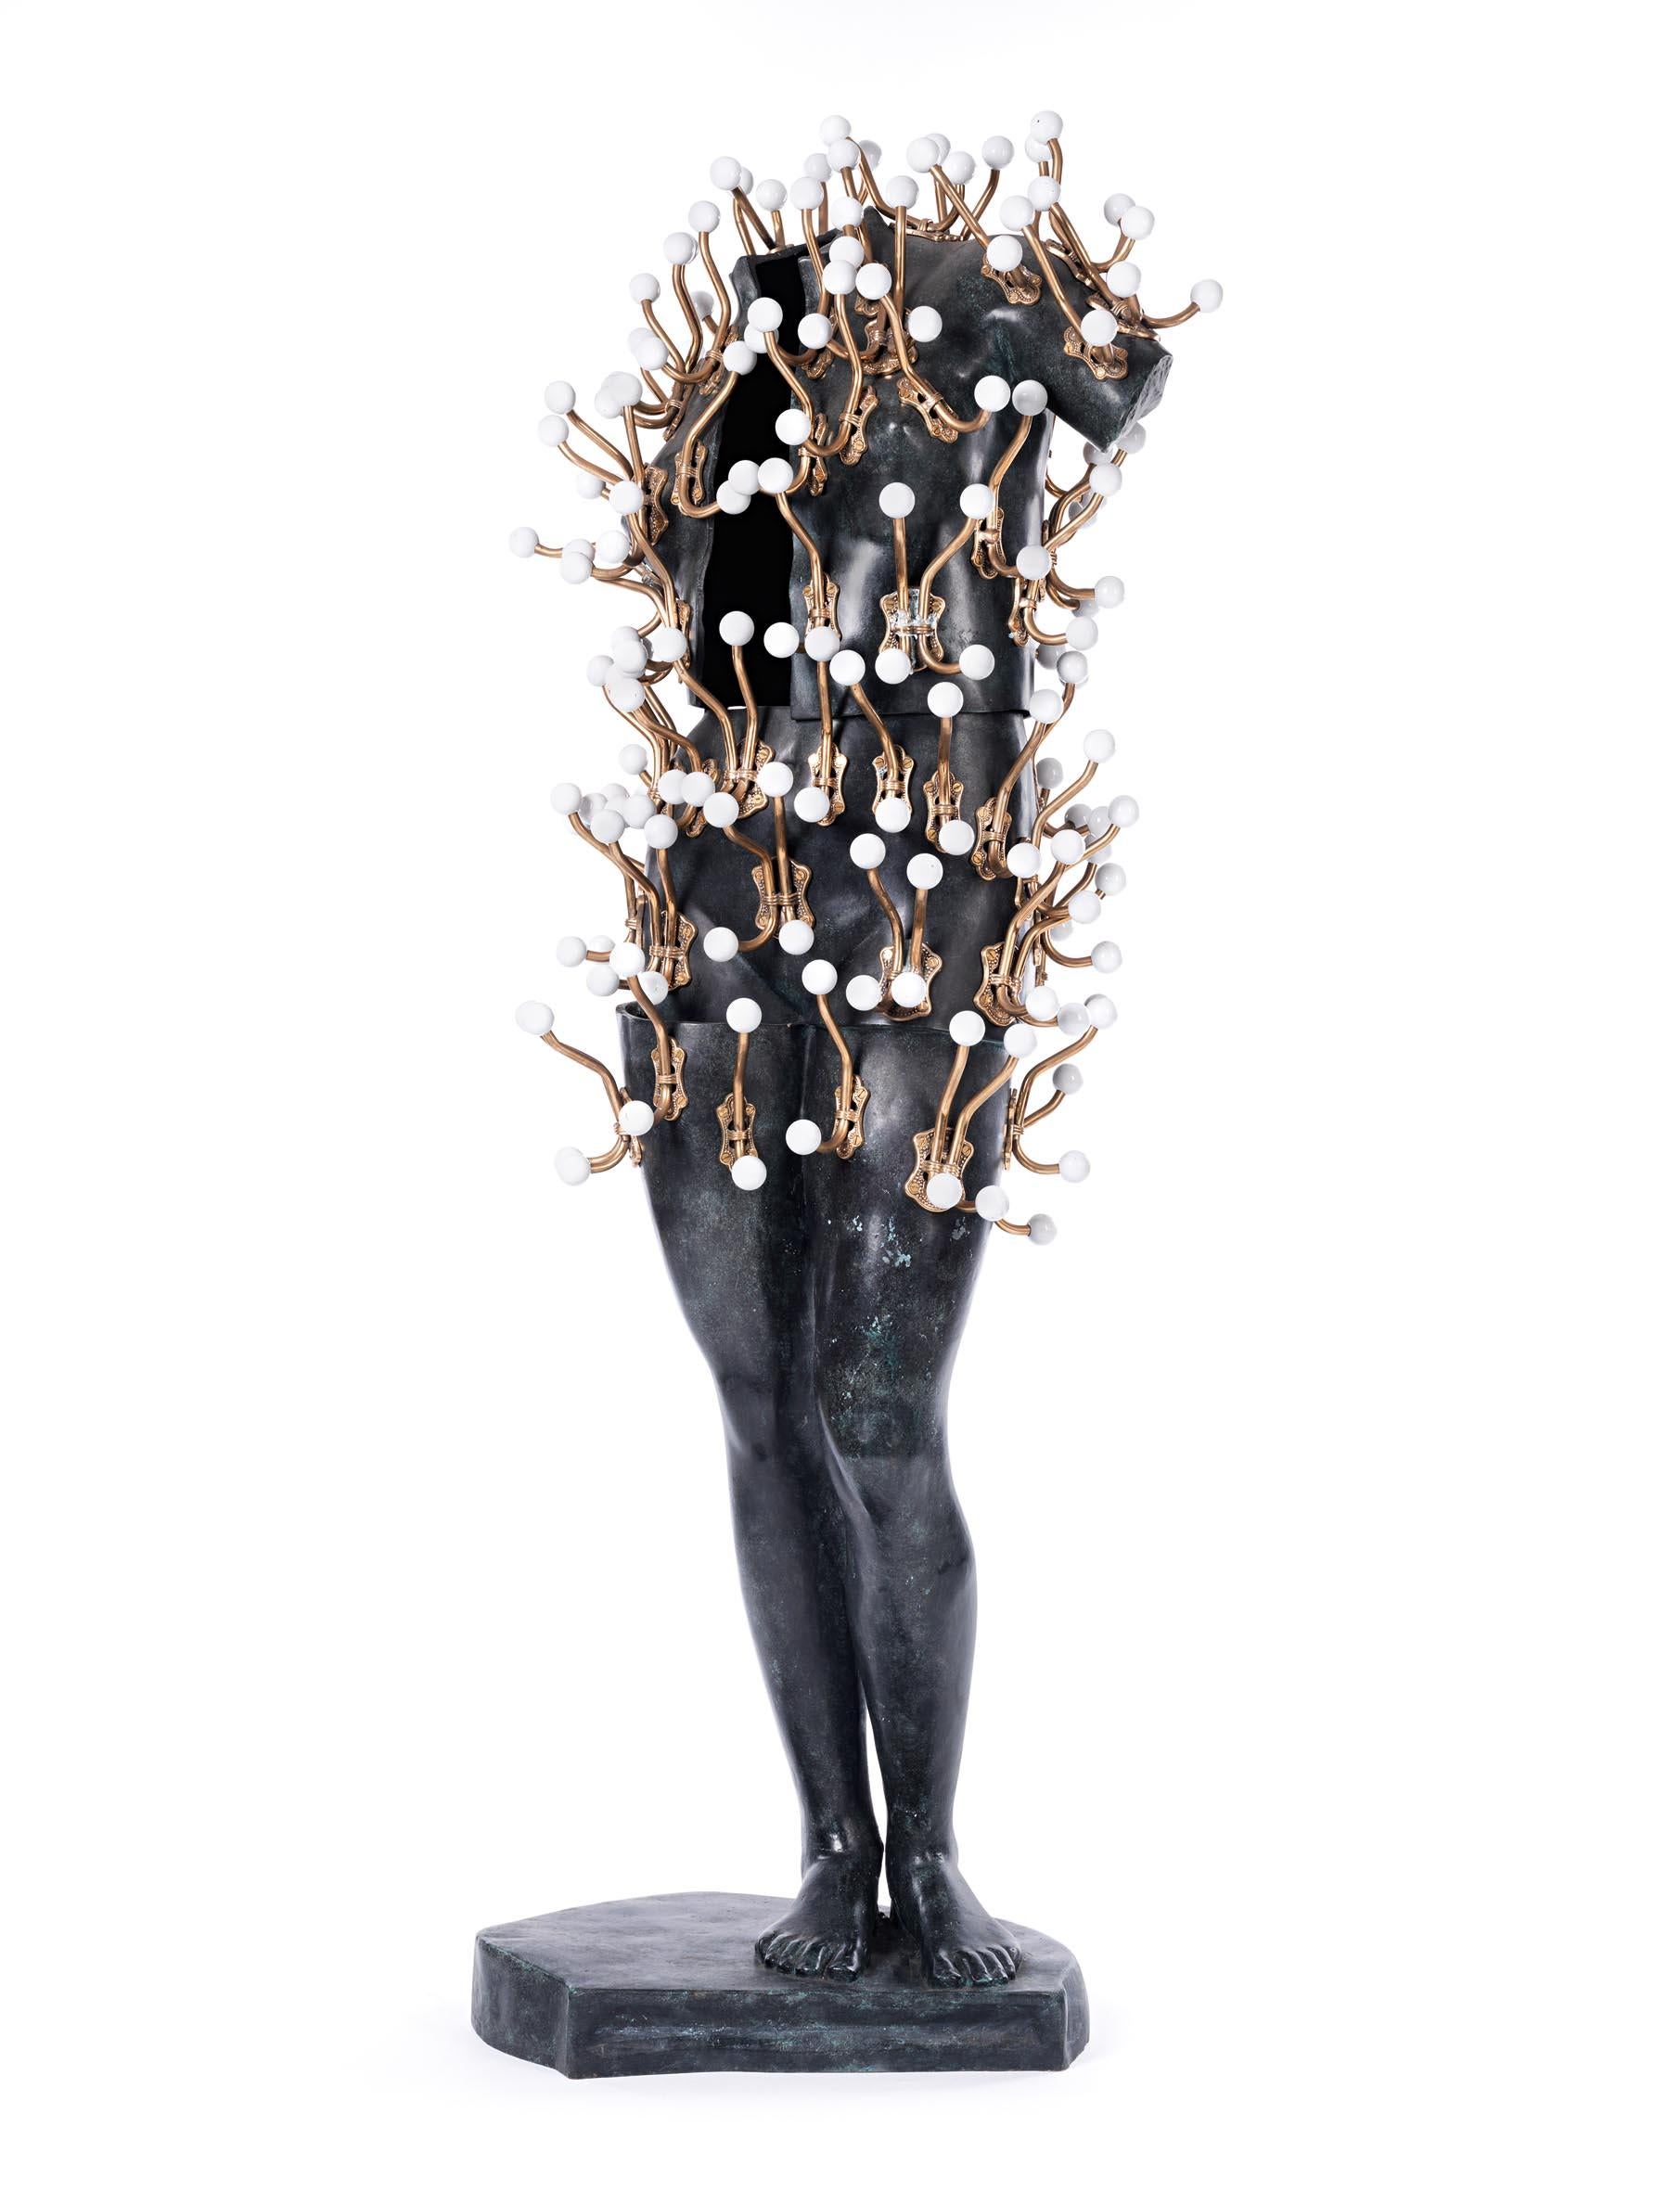 Bien habillé 2 - Arman, bronze, sculpture, décoratif, vert, femme, figure